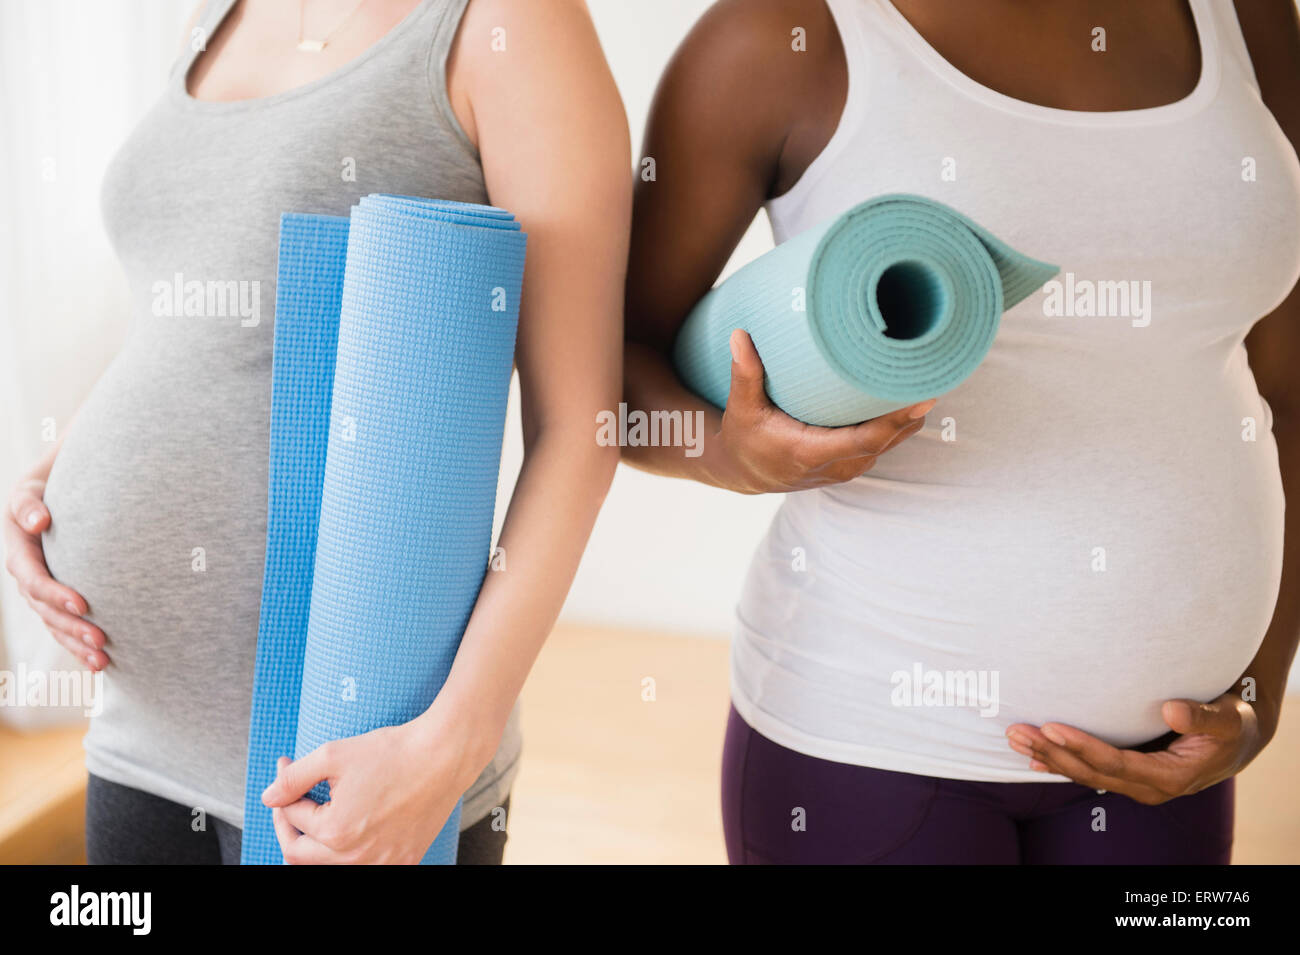 Pregnant women carrying yoga mats Stock Photo